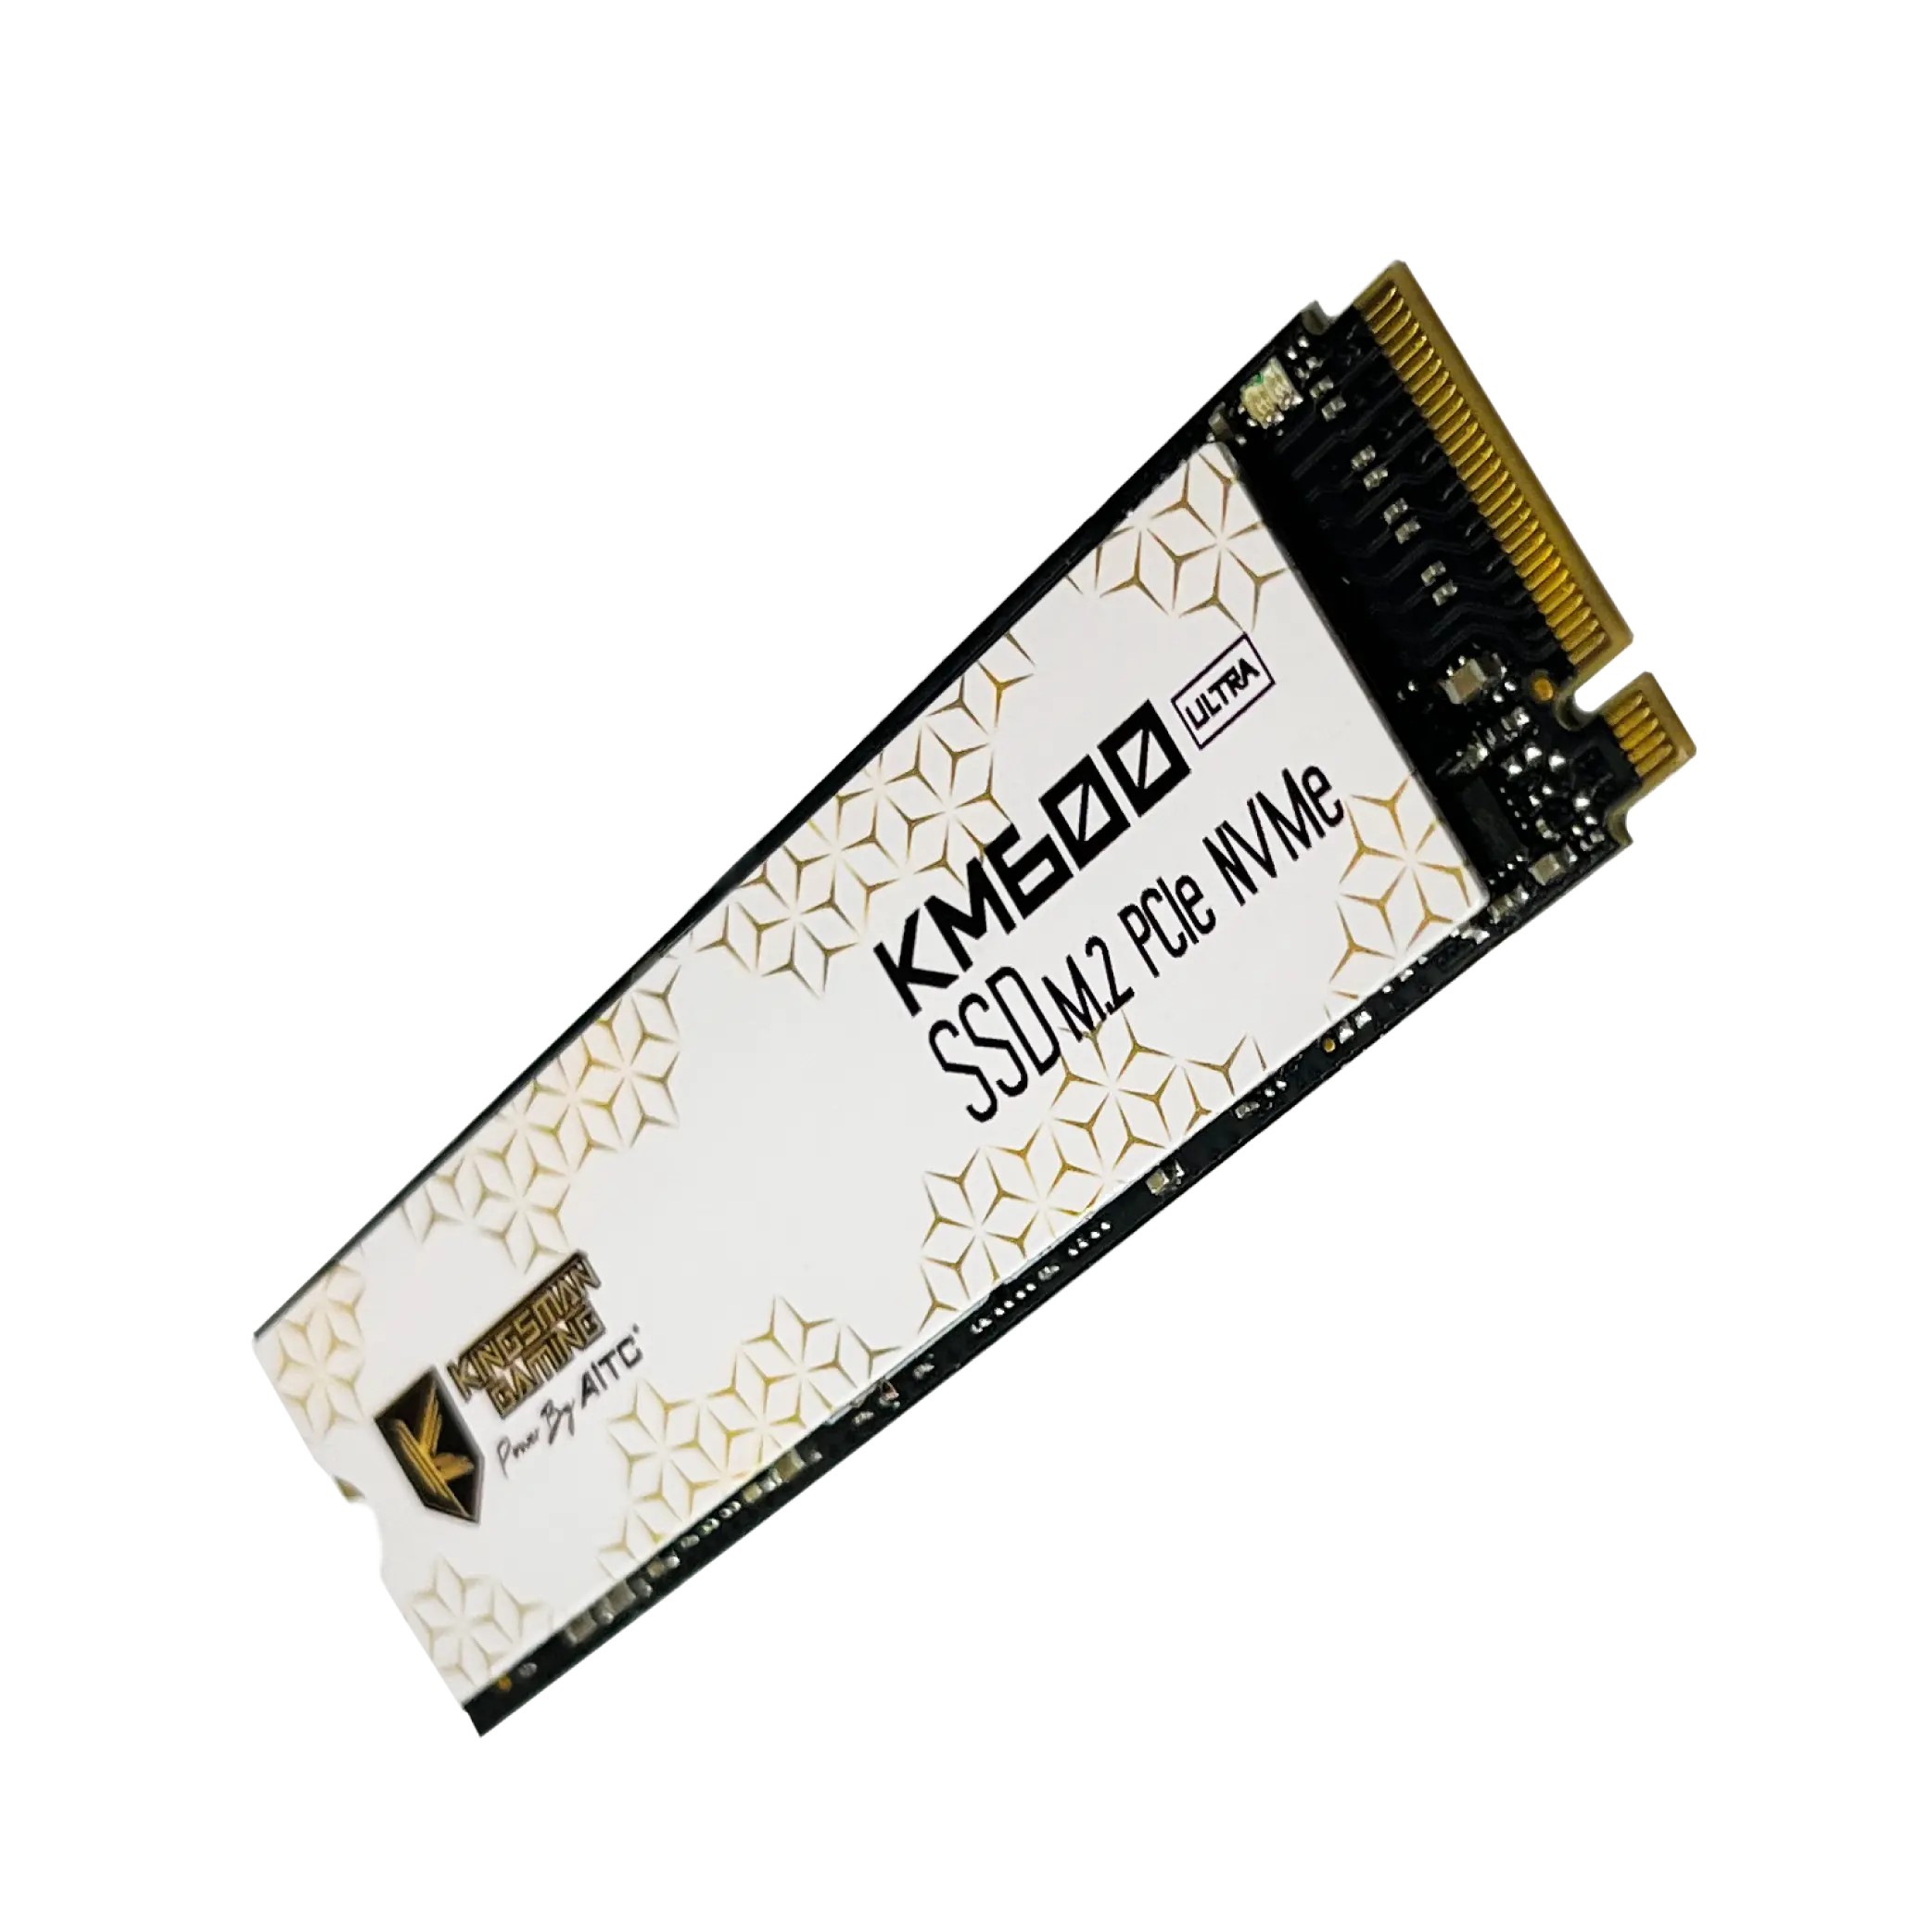 2TB M.2 Gen3 SSD พร้อมฮีทซิงค์สำหรับเดสก์ท็อปและแล็ปท็อป